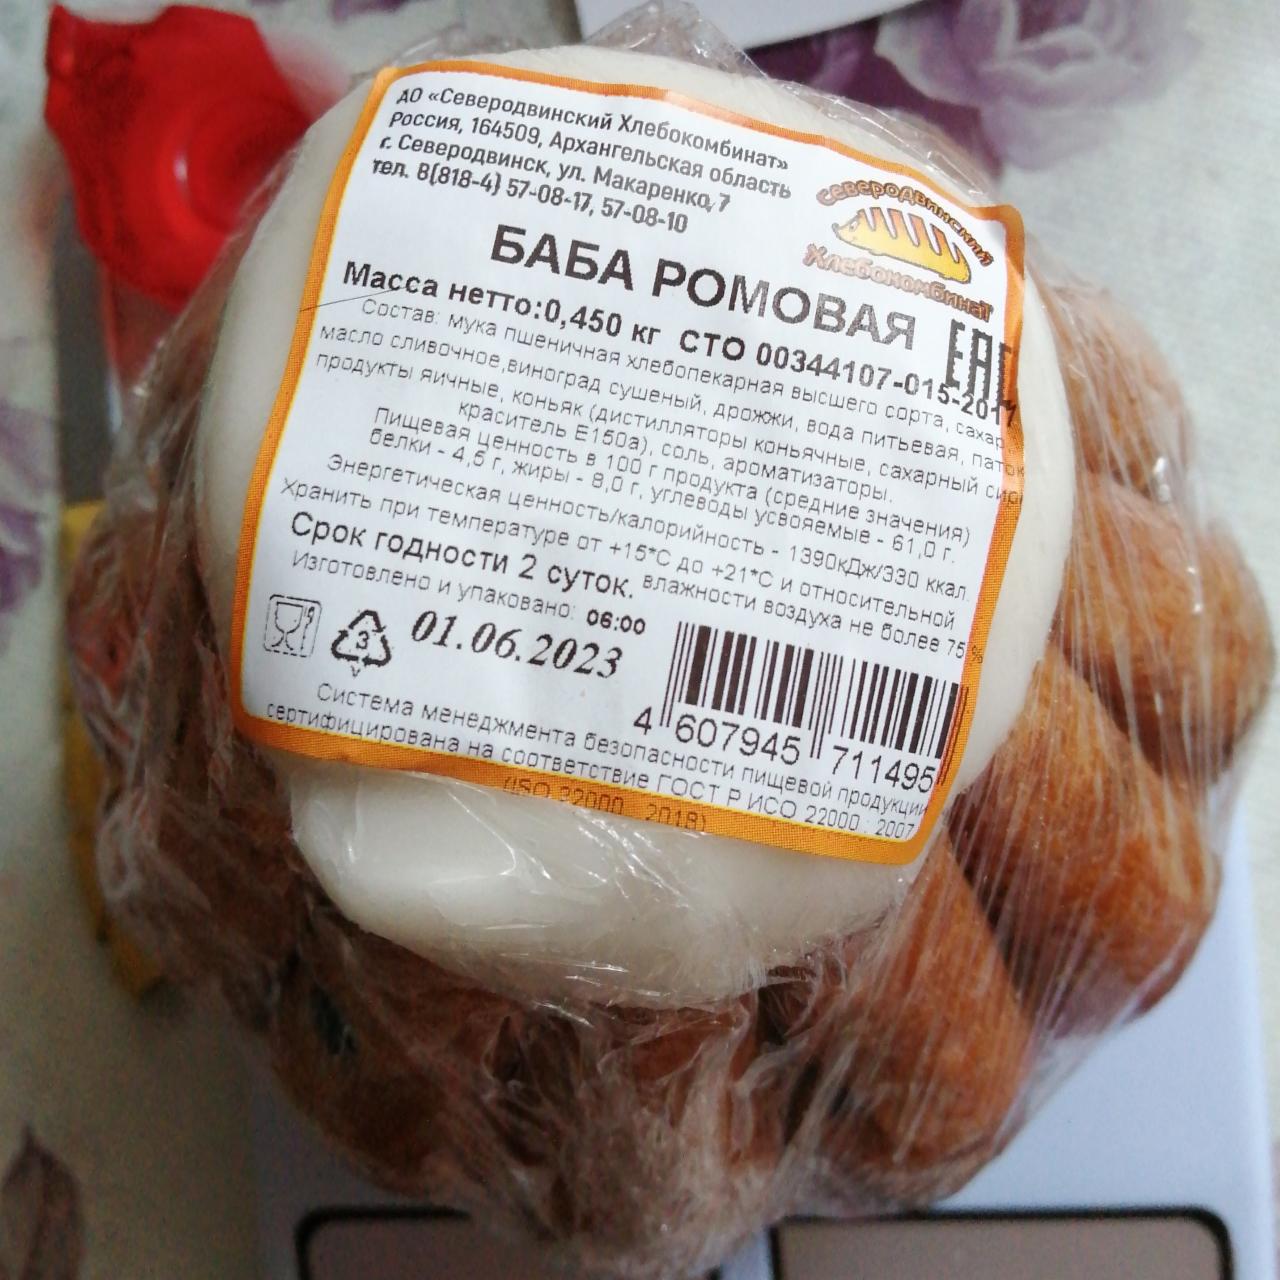 Фото - Ромовая баба Северодвинский хлебокомбинат